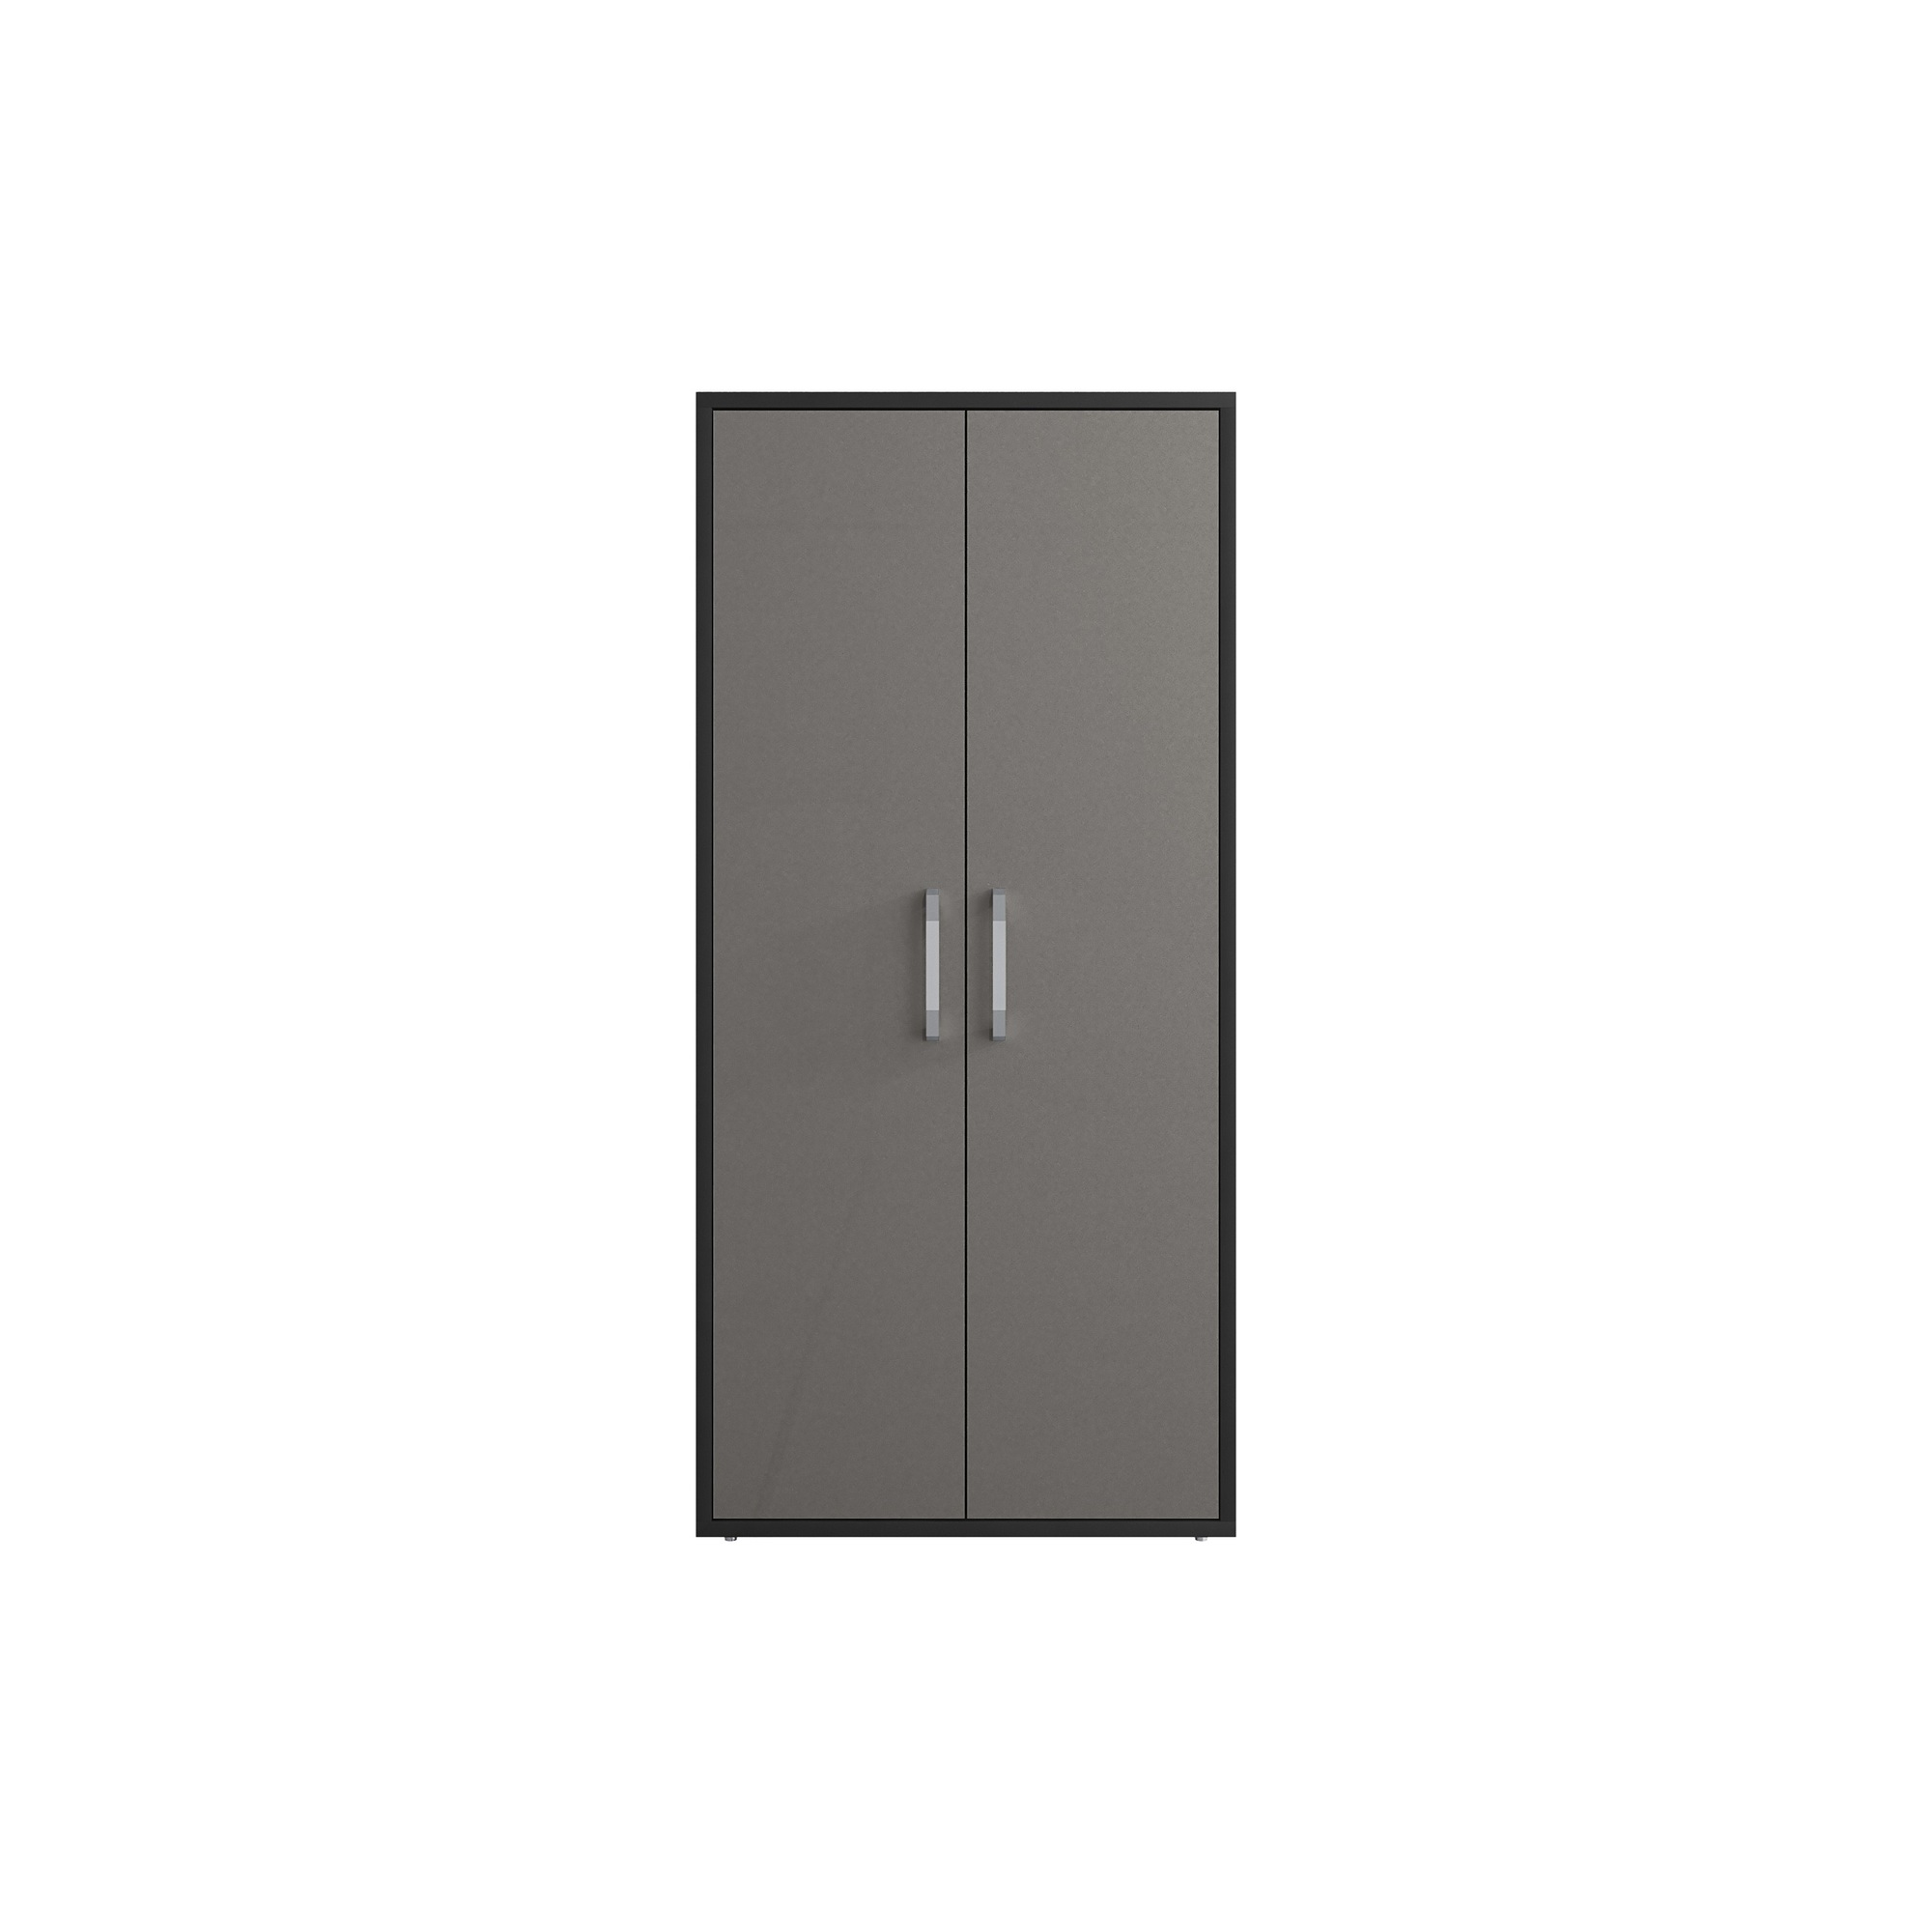 Manhattan Comfort, Eiffel 73.43 Garage Cabinet, Grey Gloss, Height 73.43 in, Width 35.43 in, Color Gray, Model 250BMC